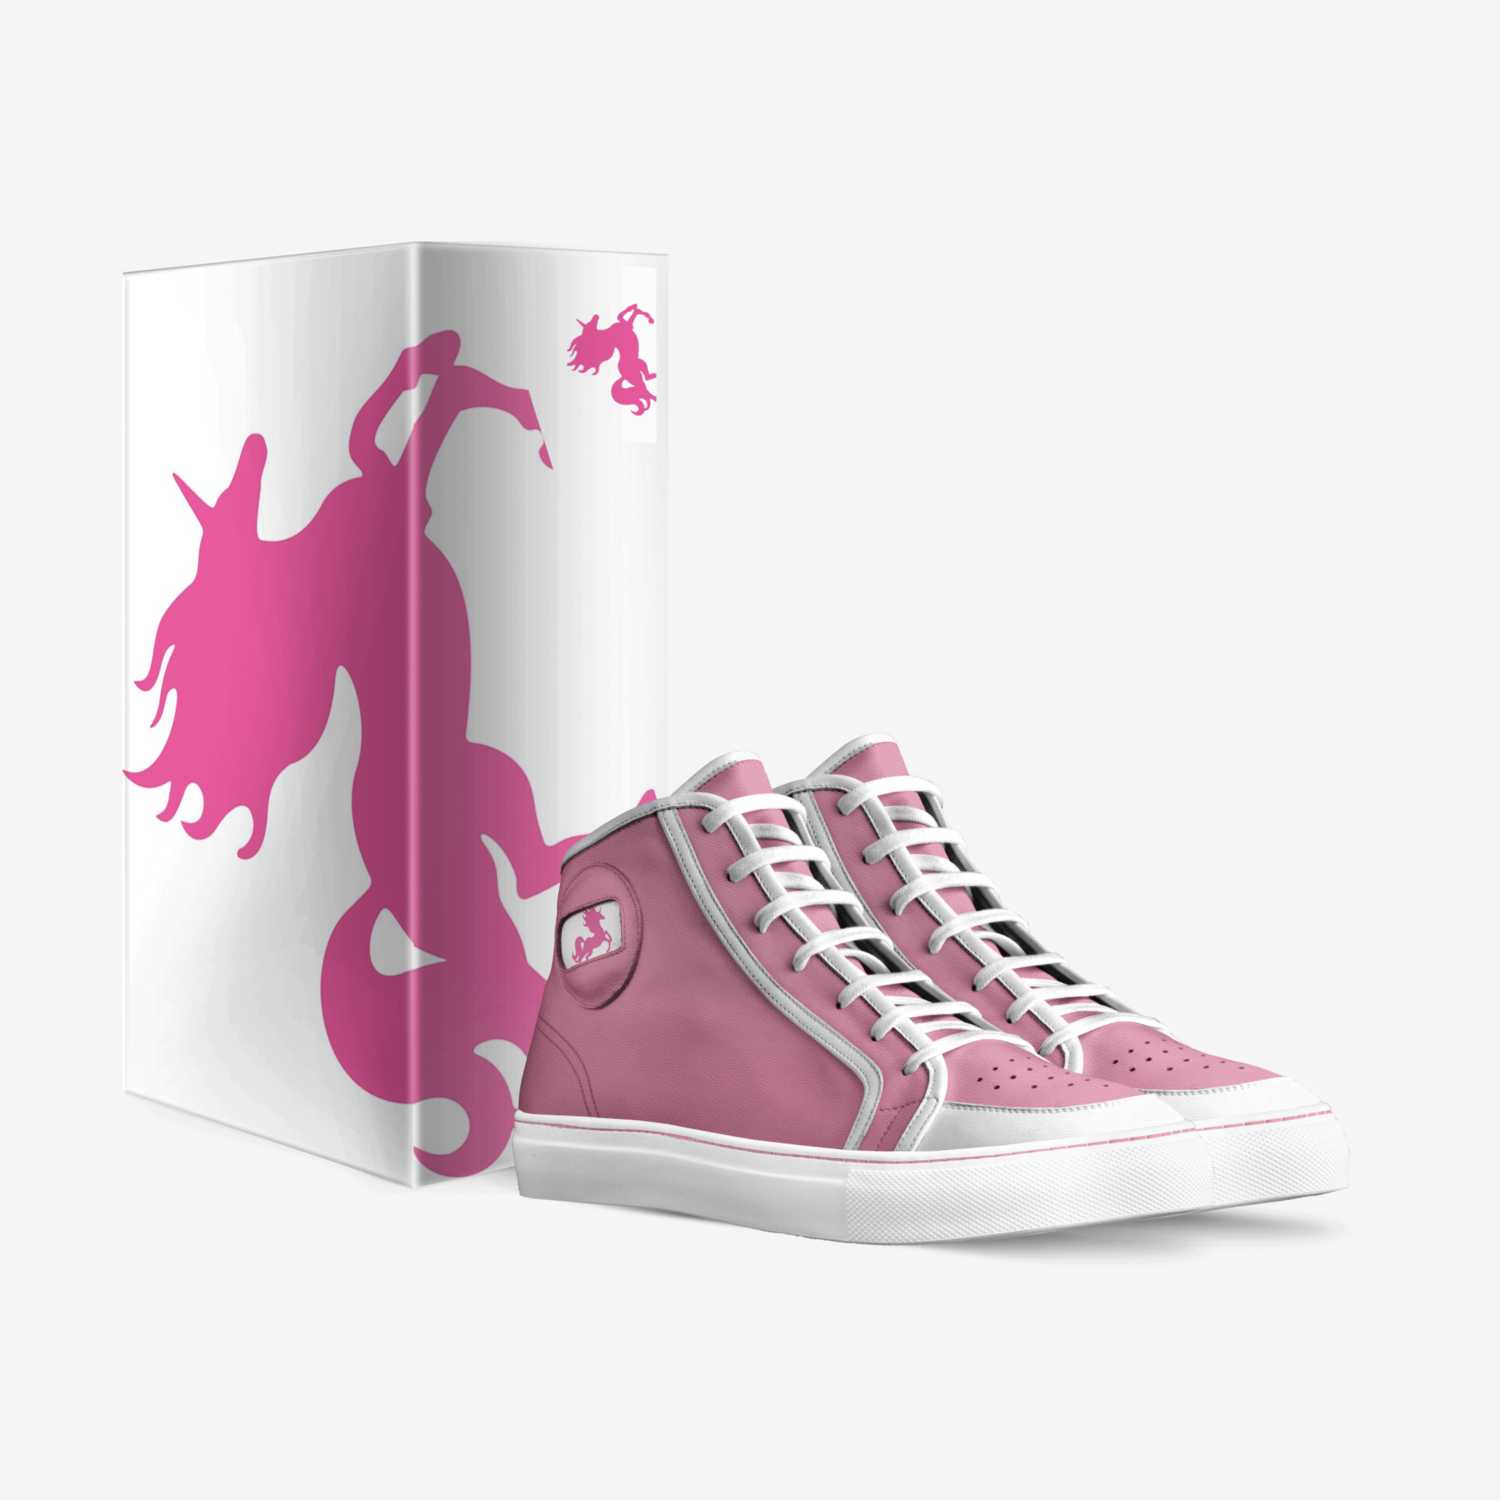 Unicorn custom made in Italy shoes by Amaru Xi-ali | Box view